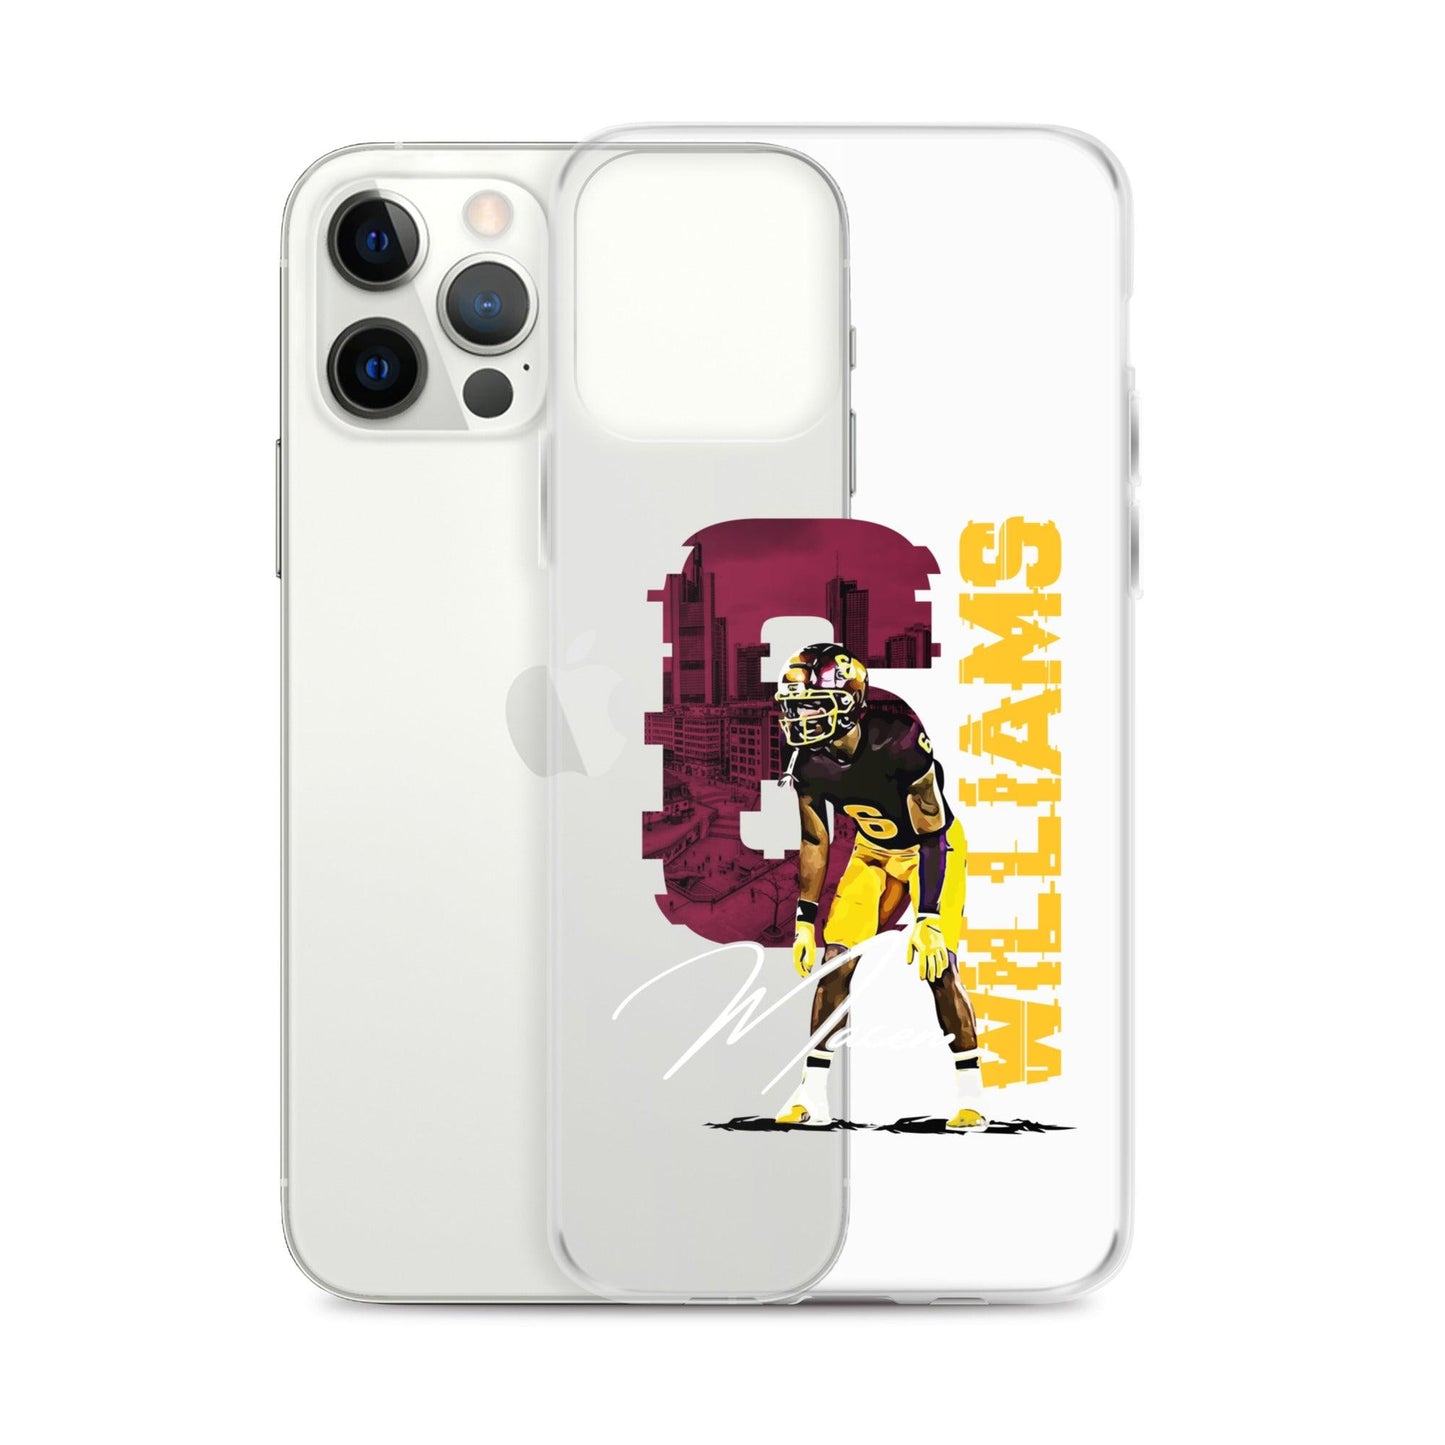 Macen Williams "Gameday" iPhone® - Fan Arch